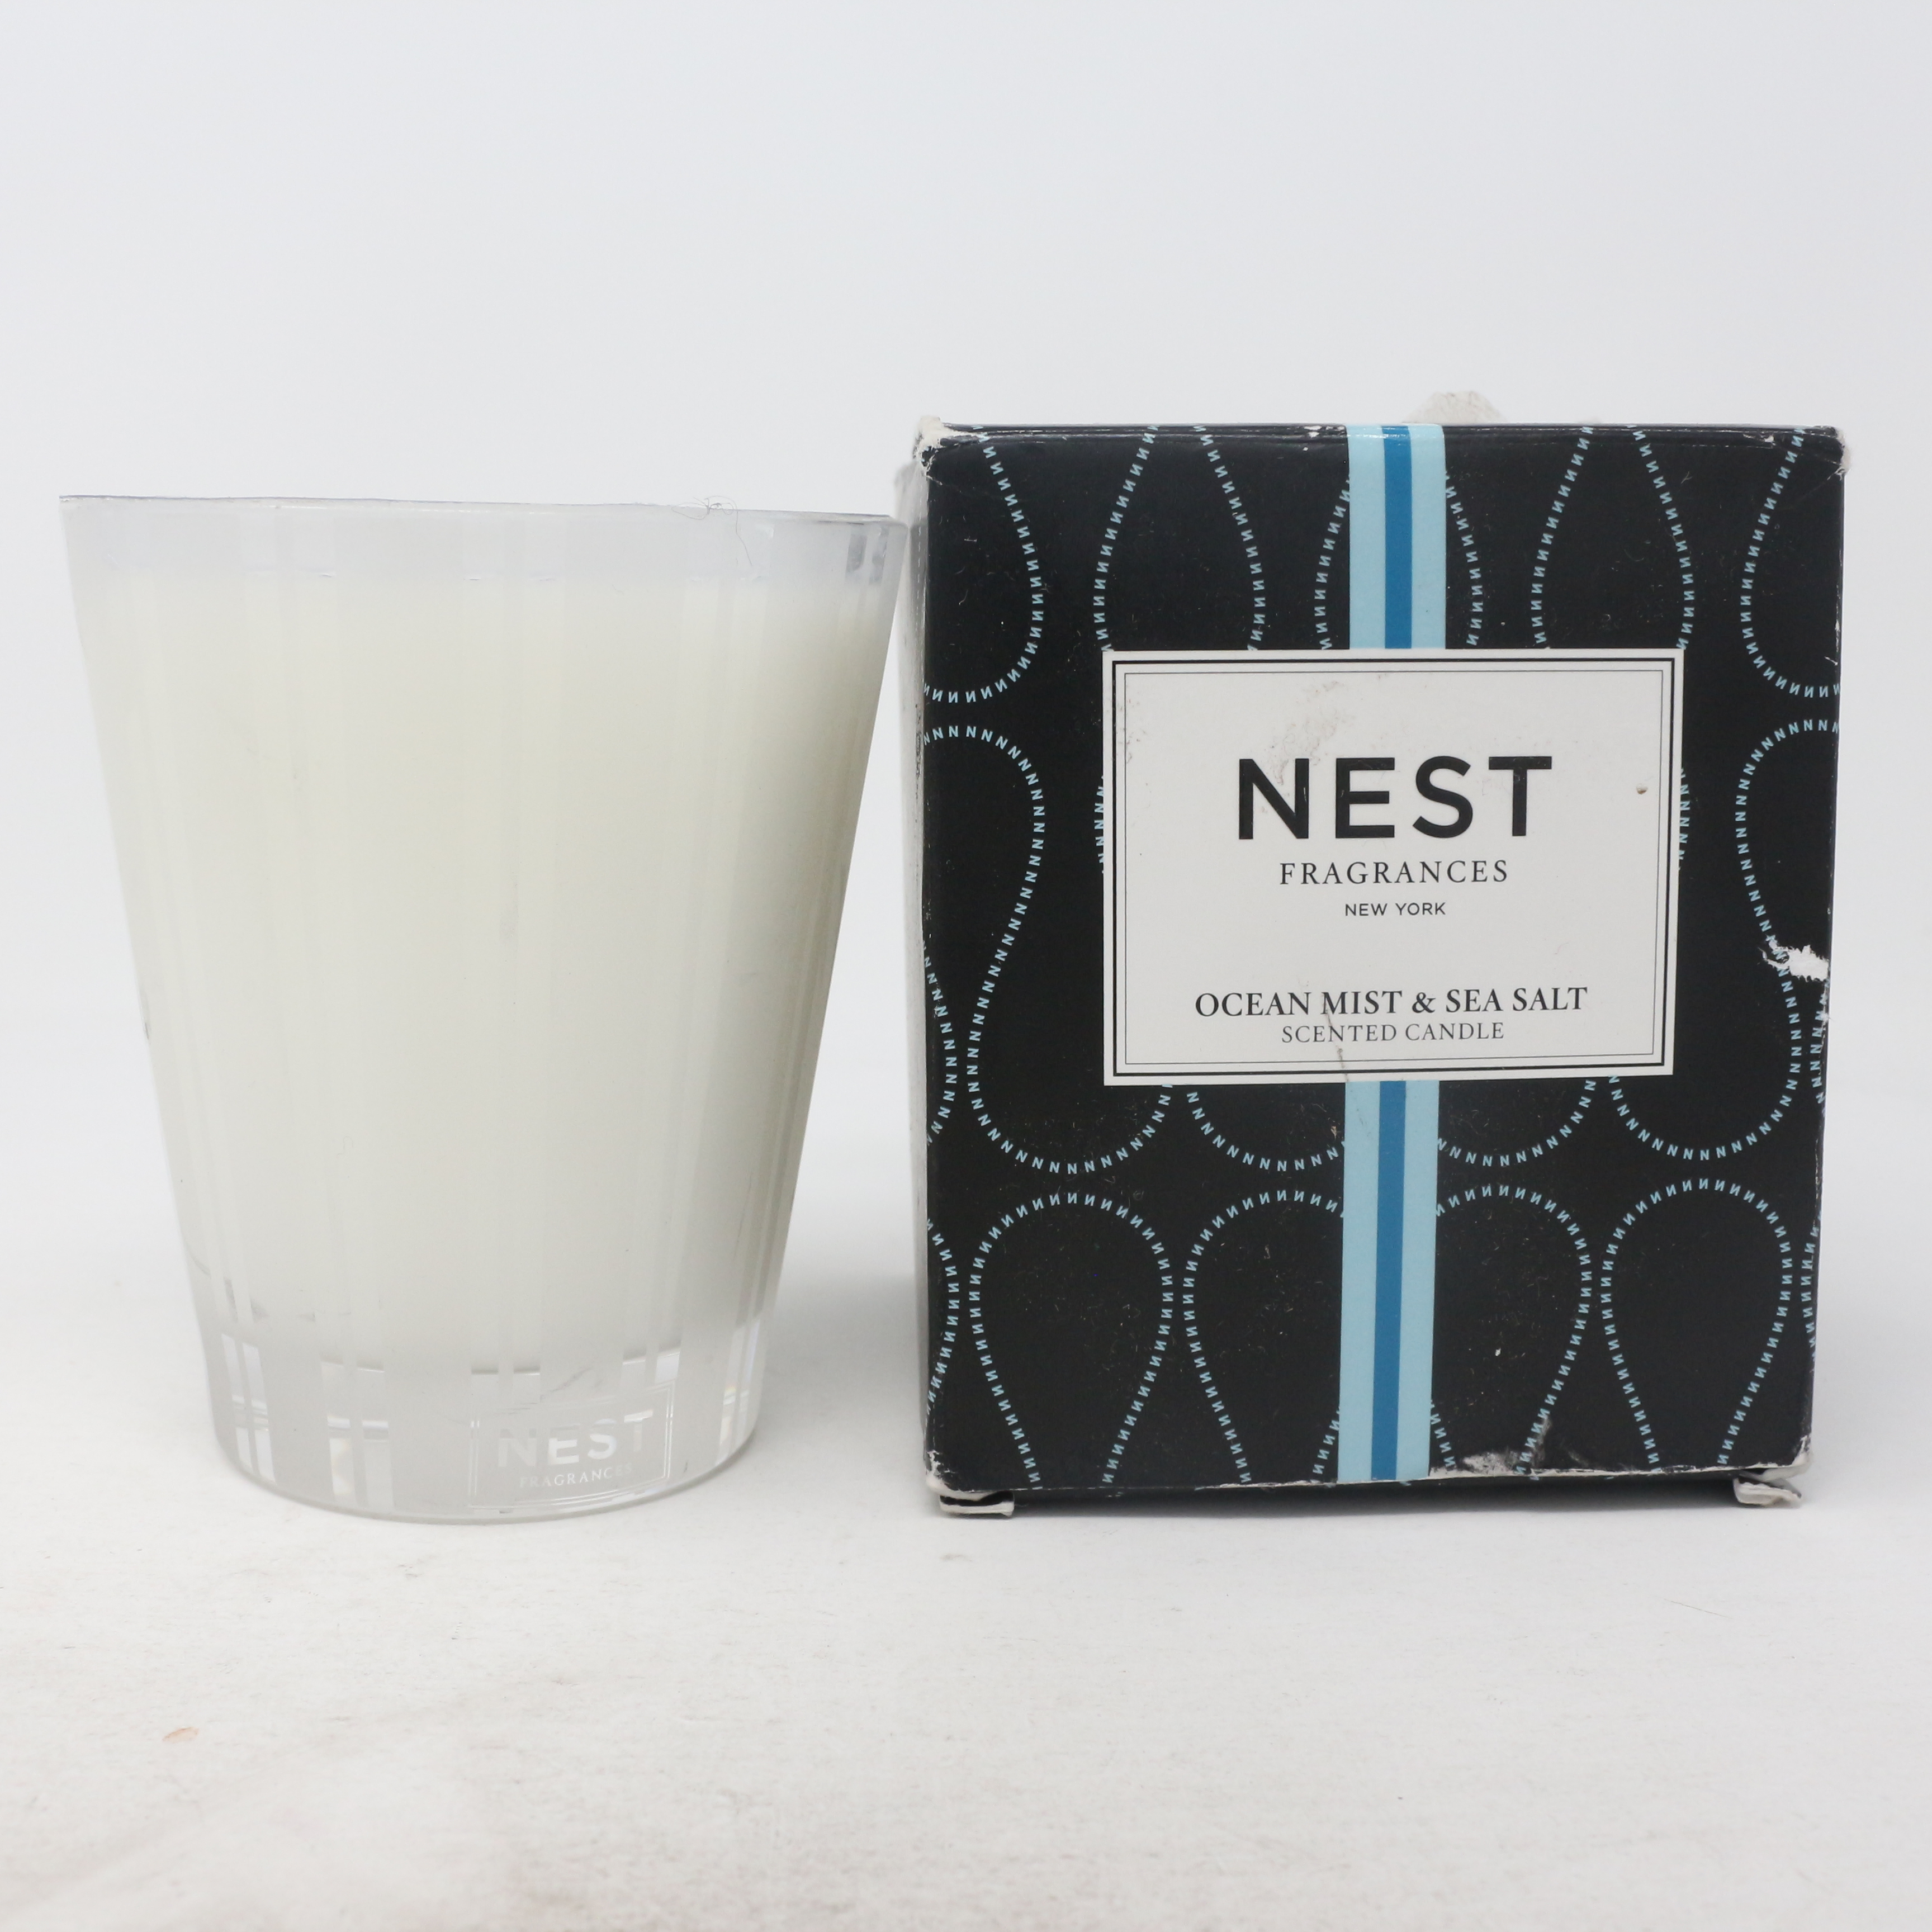 NEST Fragrances Classic Candle 8.1oz- Ocean Mist & Sea Salt - image 1 of 2